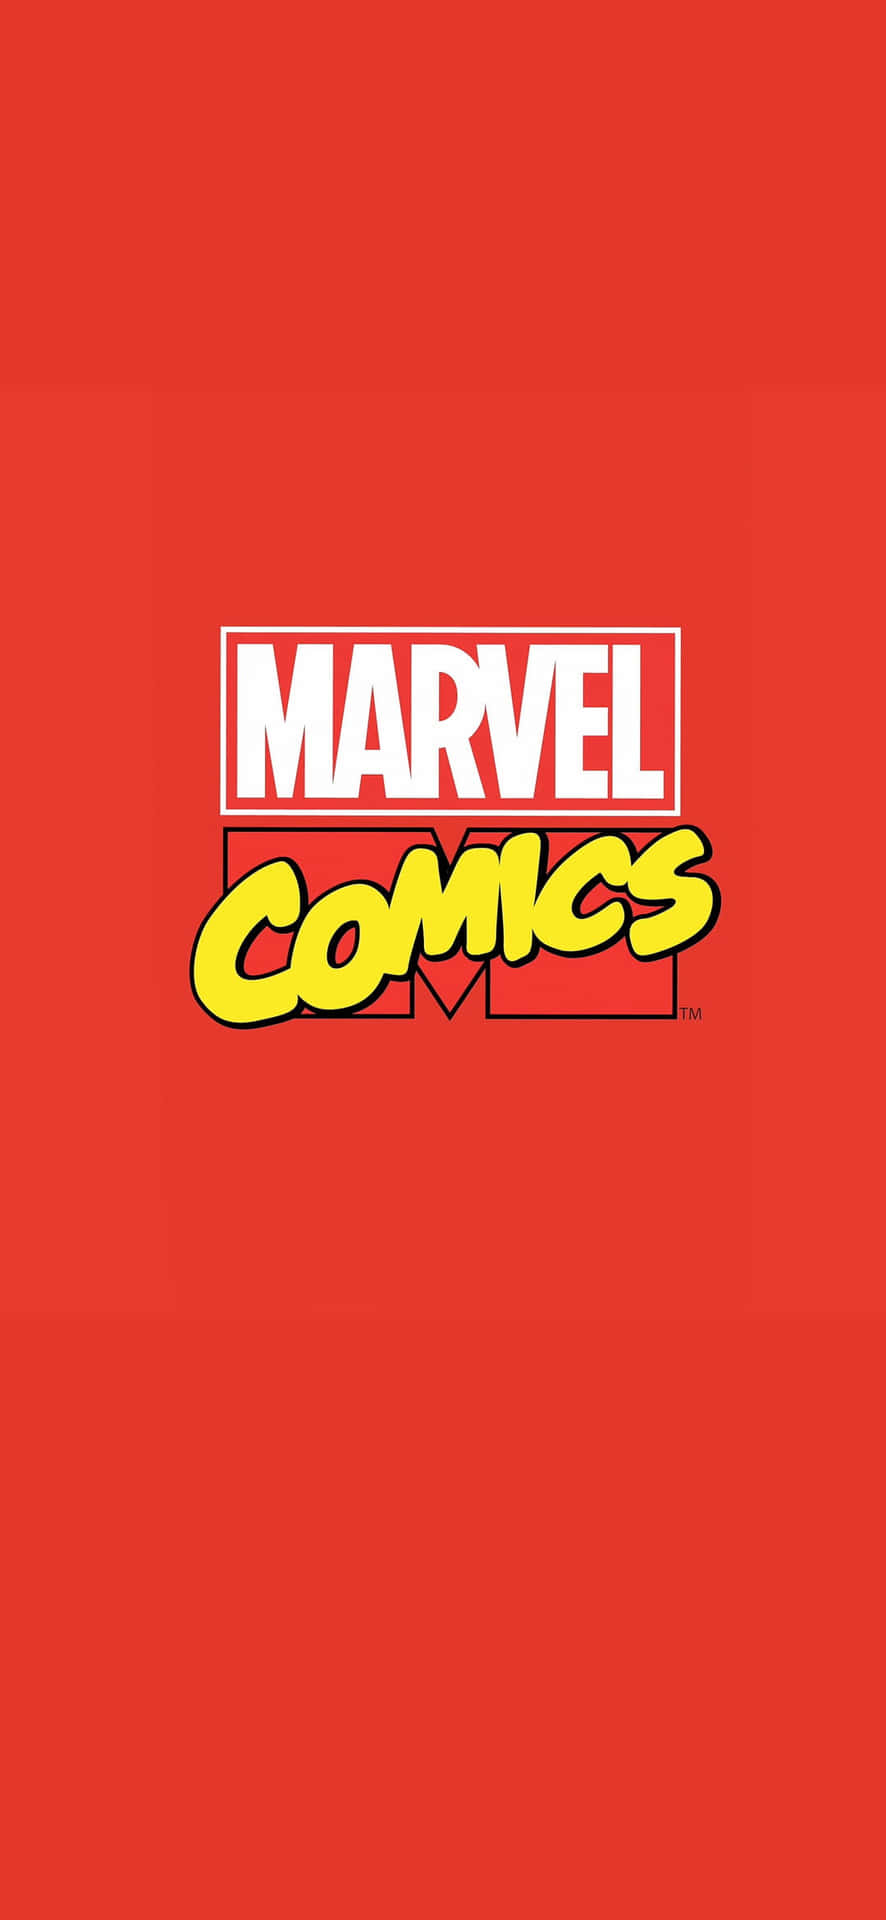 Rödpixel 3xl Bakgrund Med Marvel Comics-motiv.